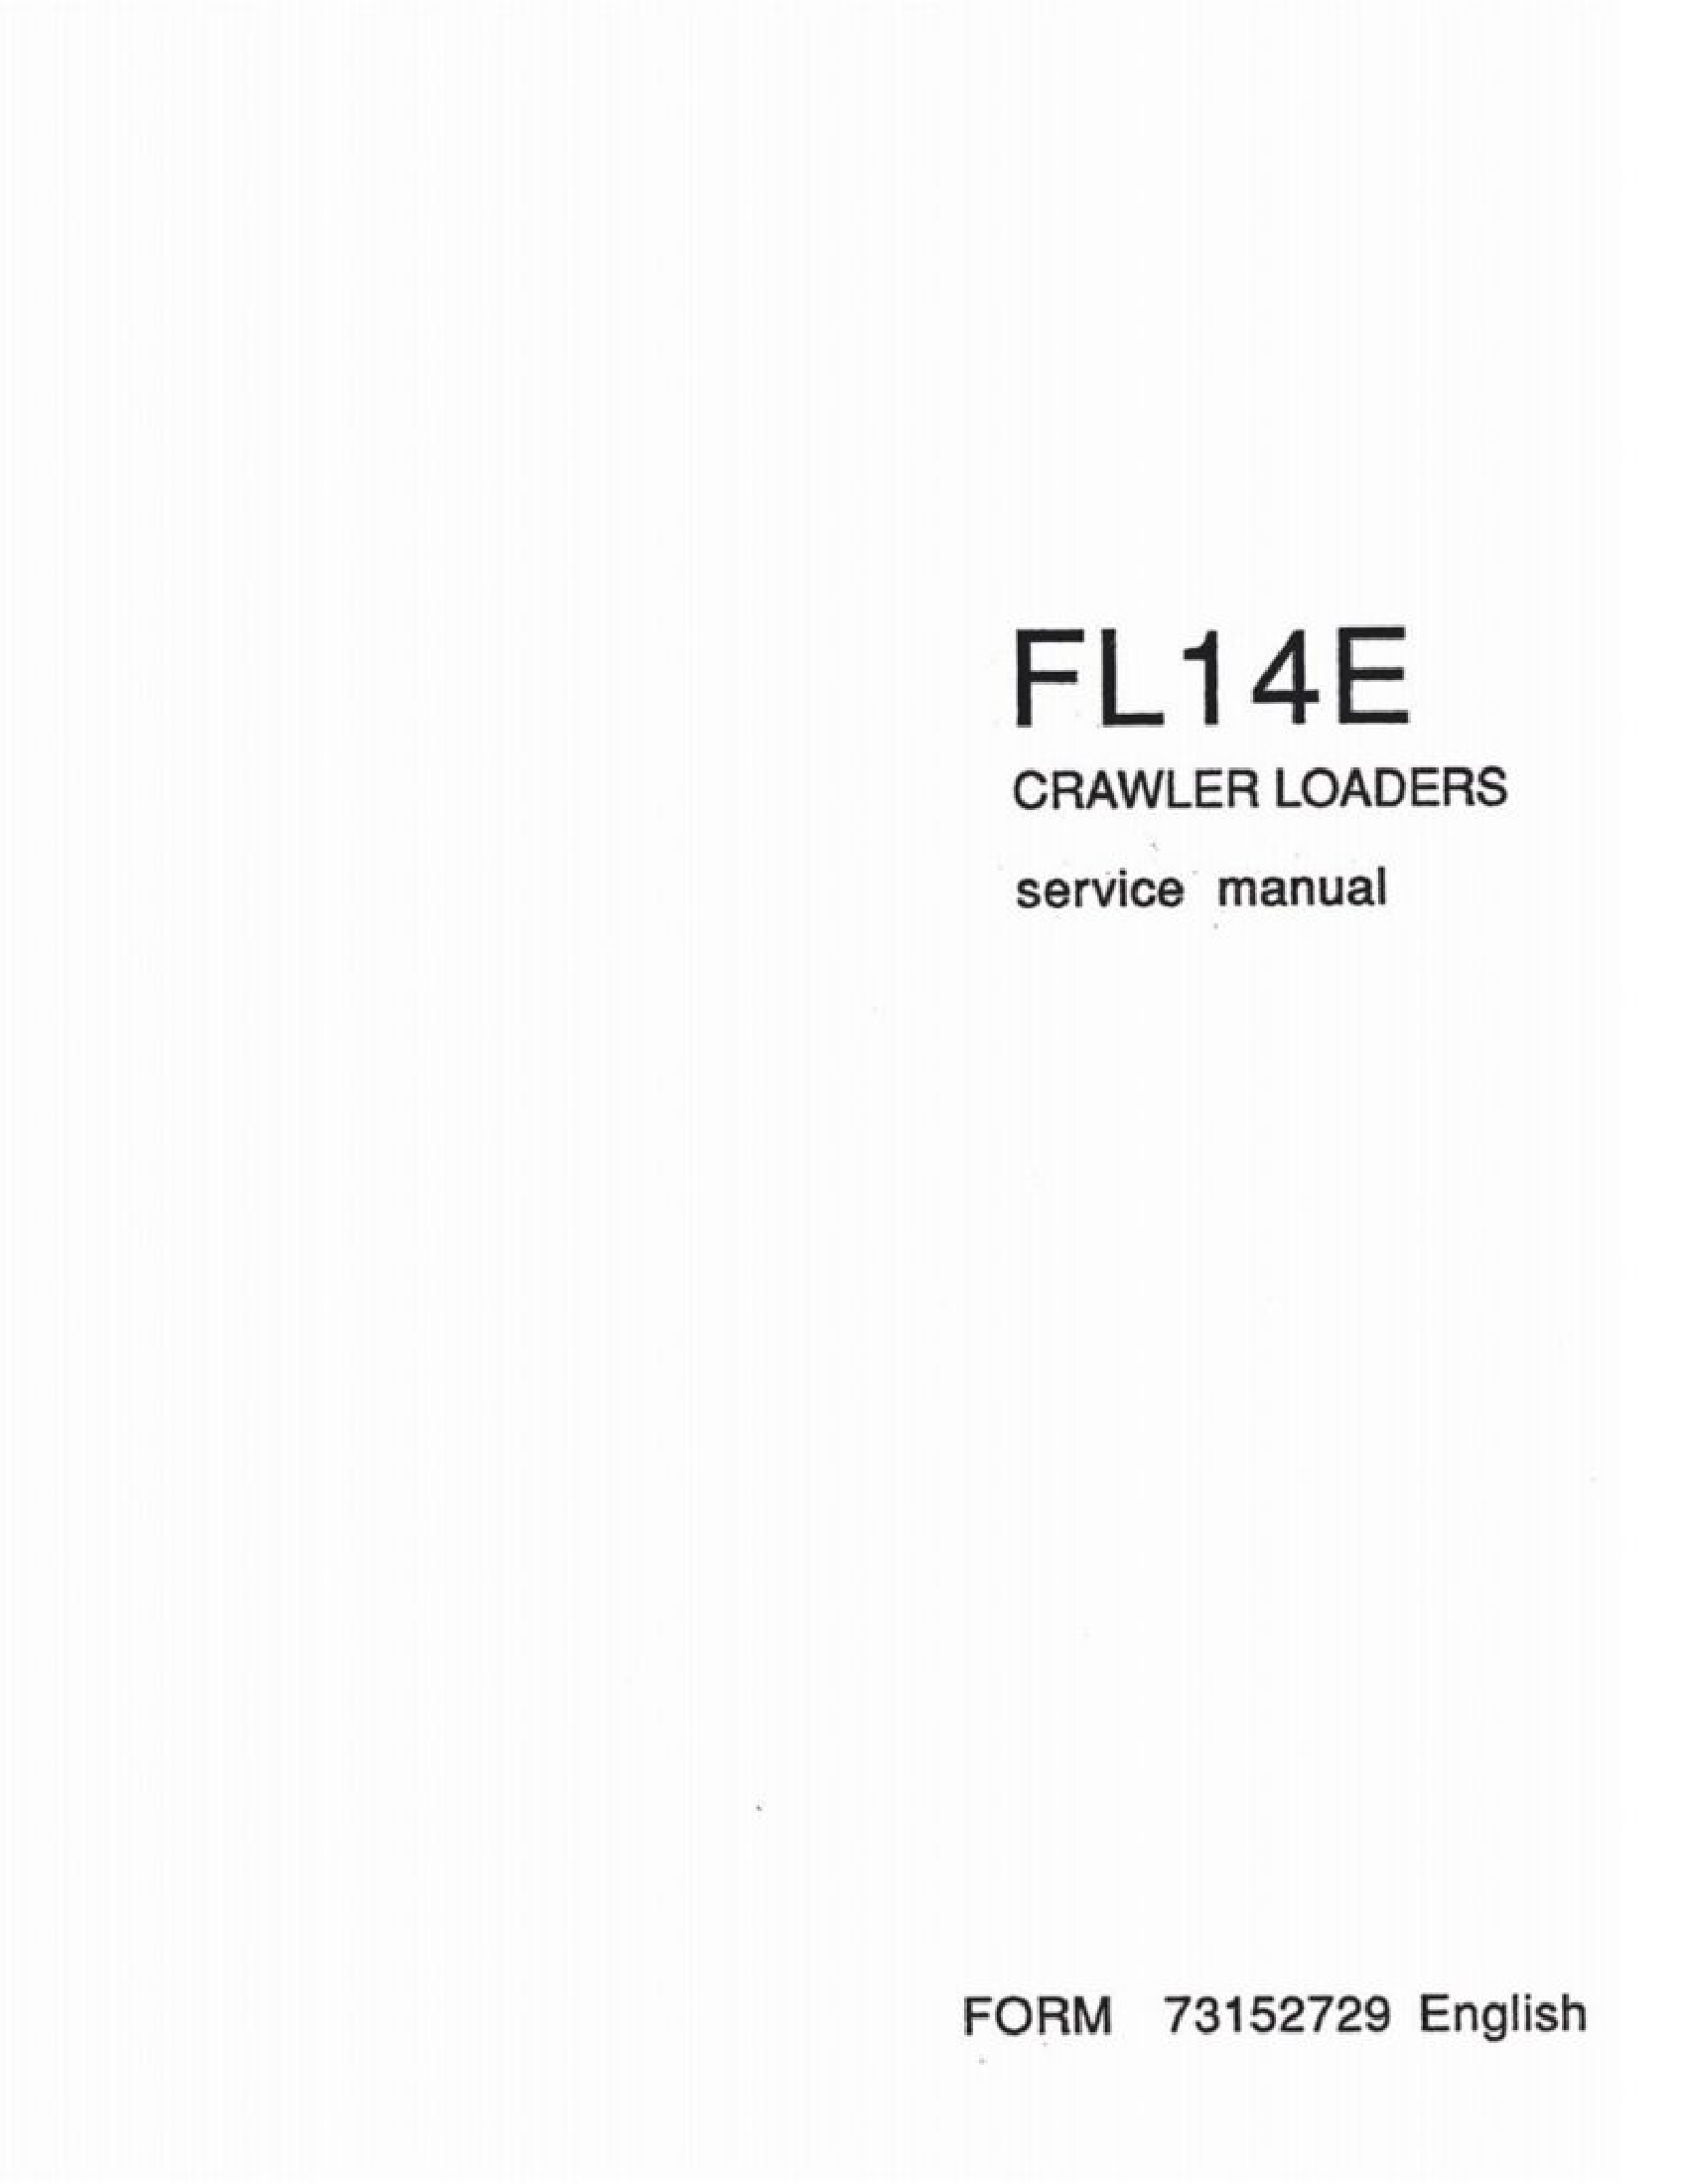 Fiat-Allis FL14E Crawler Loader manual